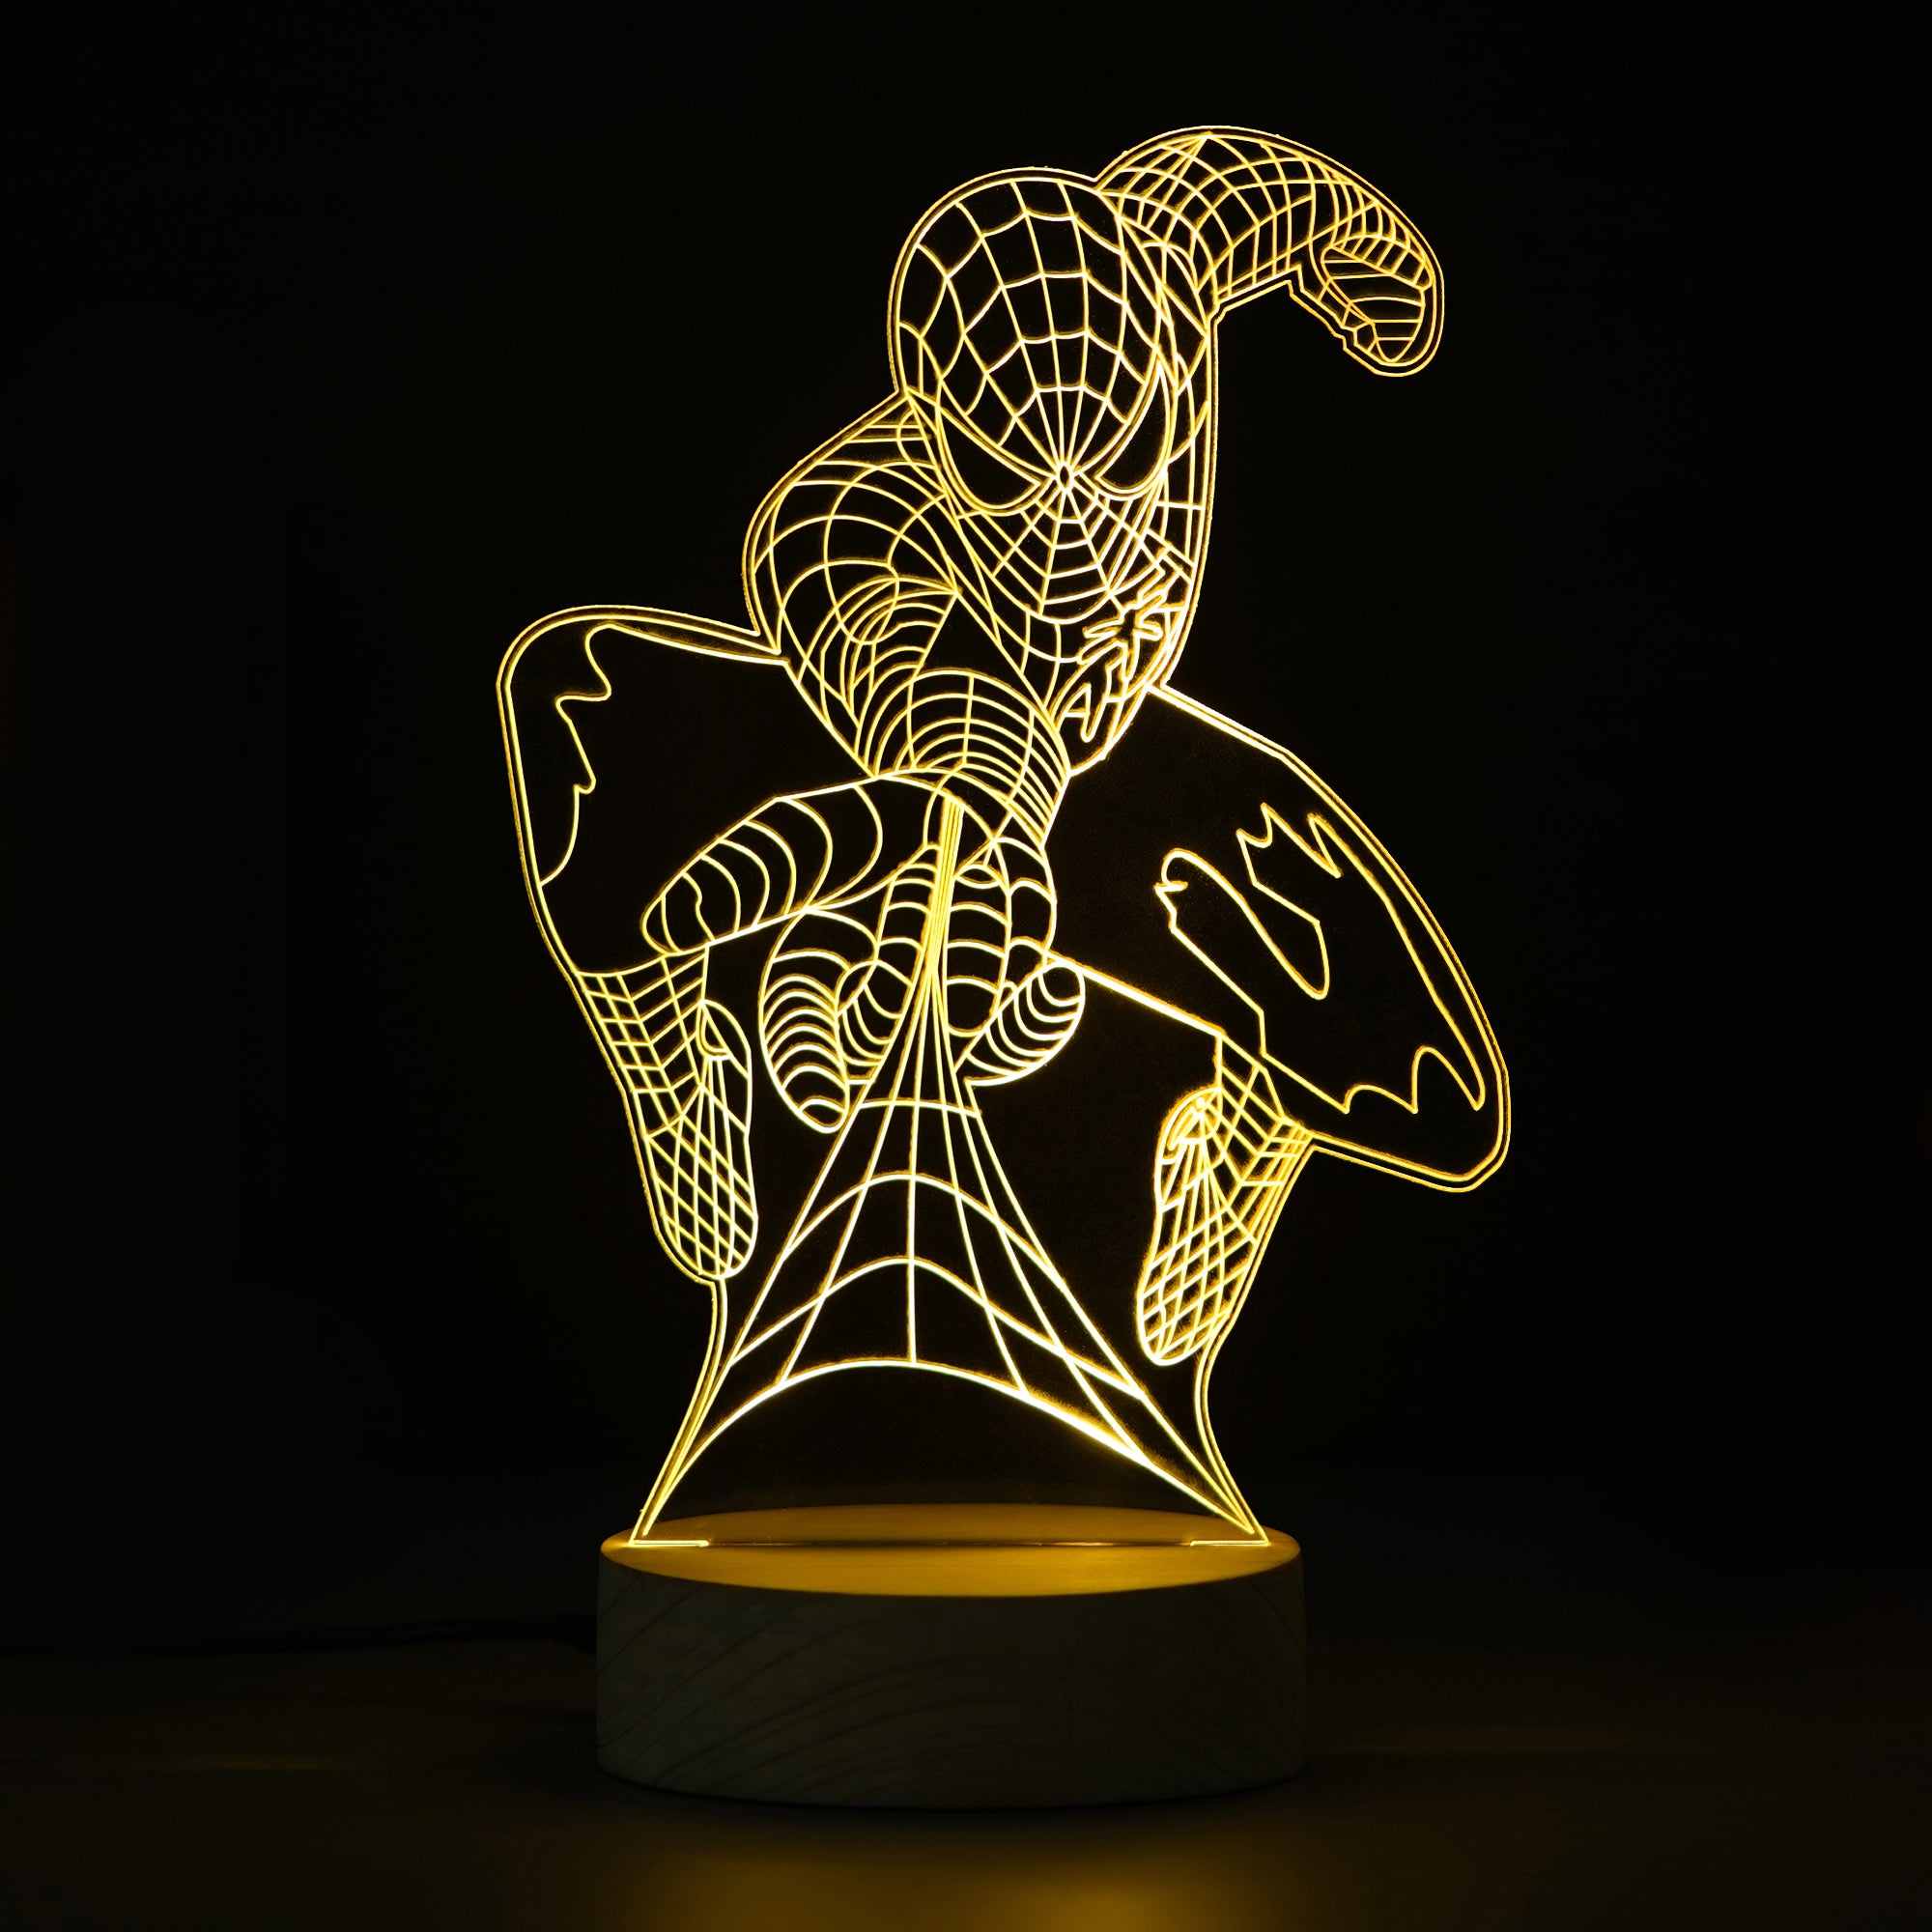 Spiderman Design Carved on Acrylic & Wood Base Night Lamp 1